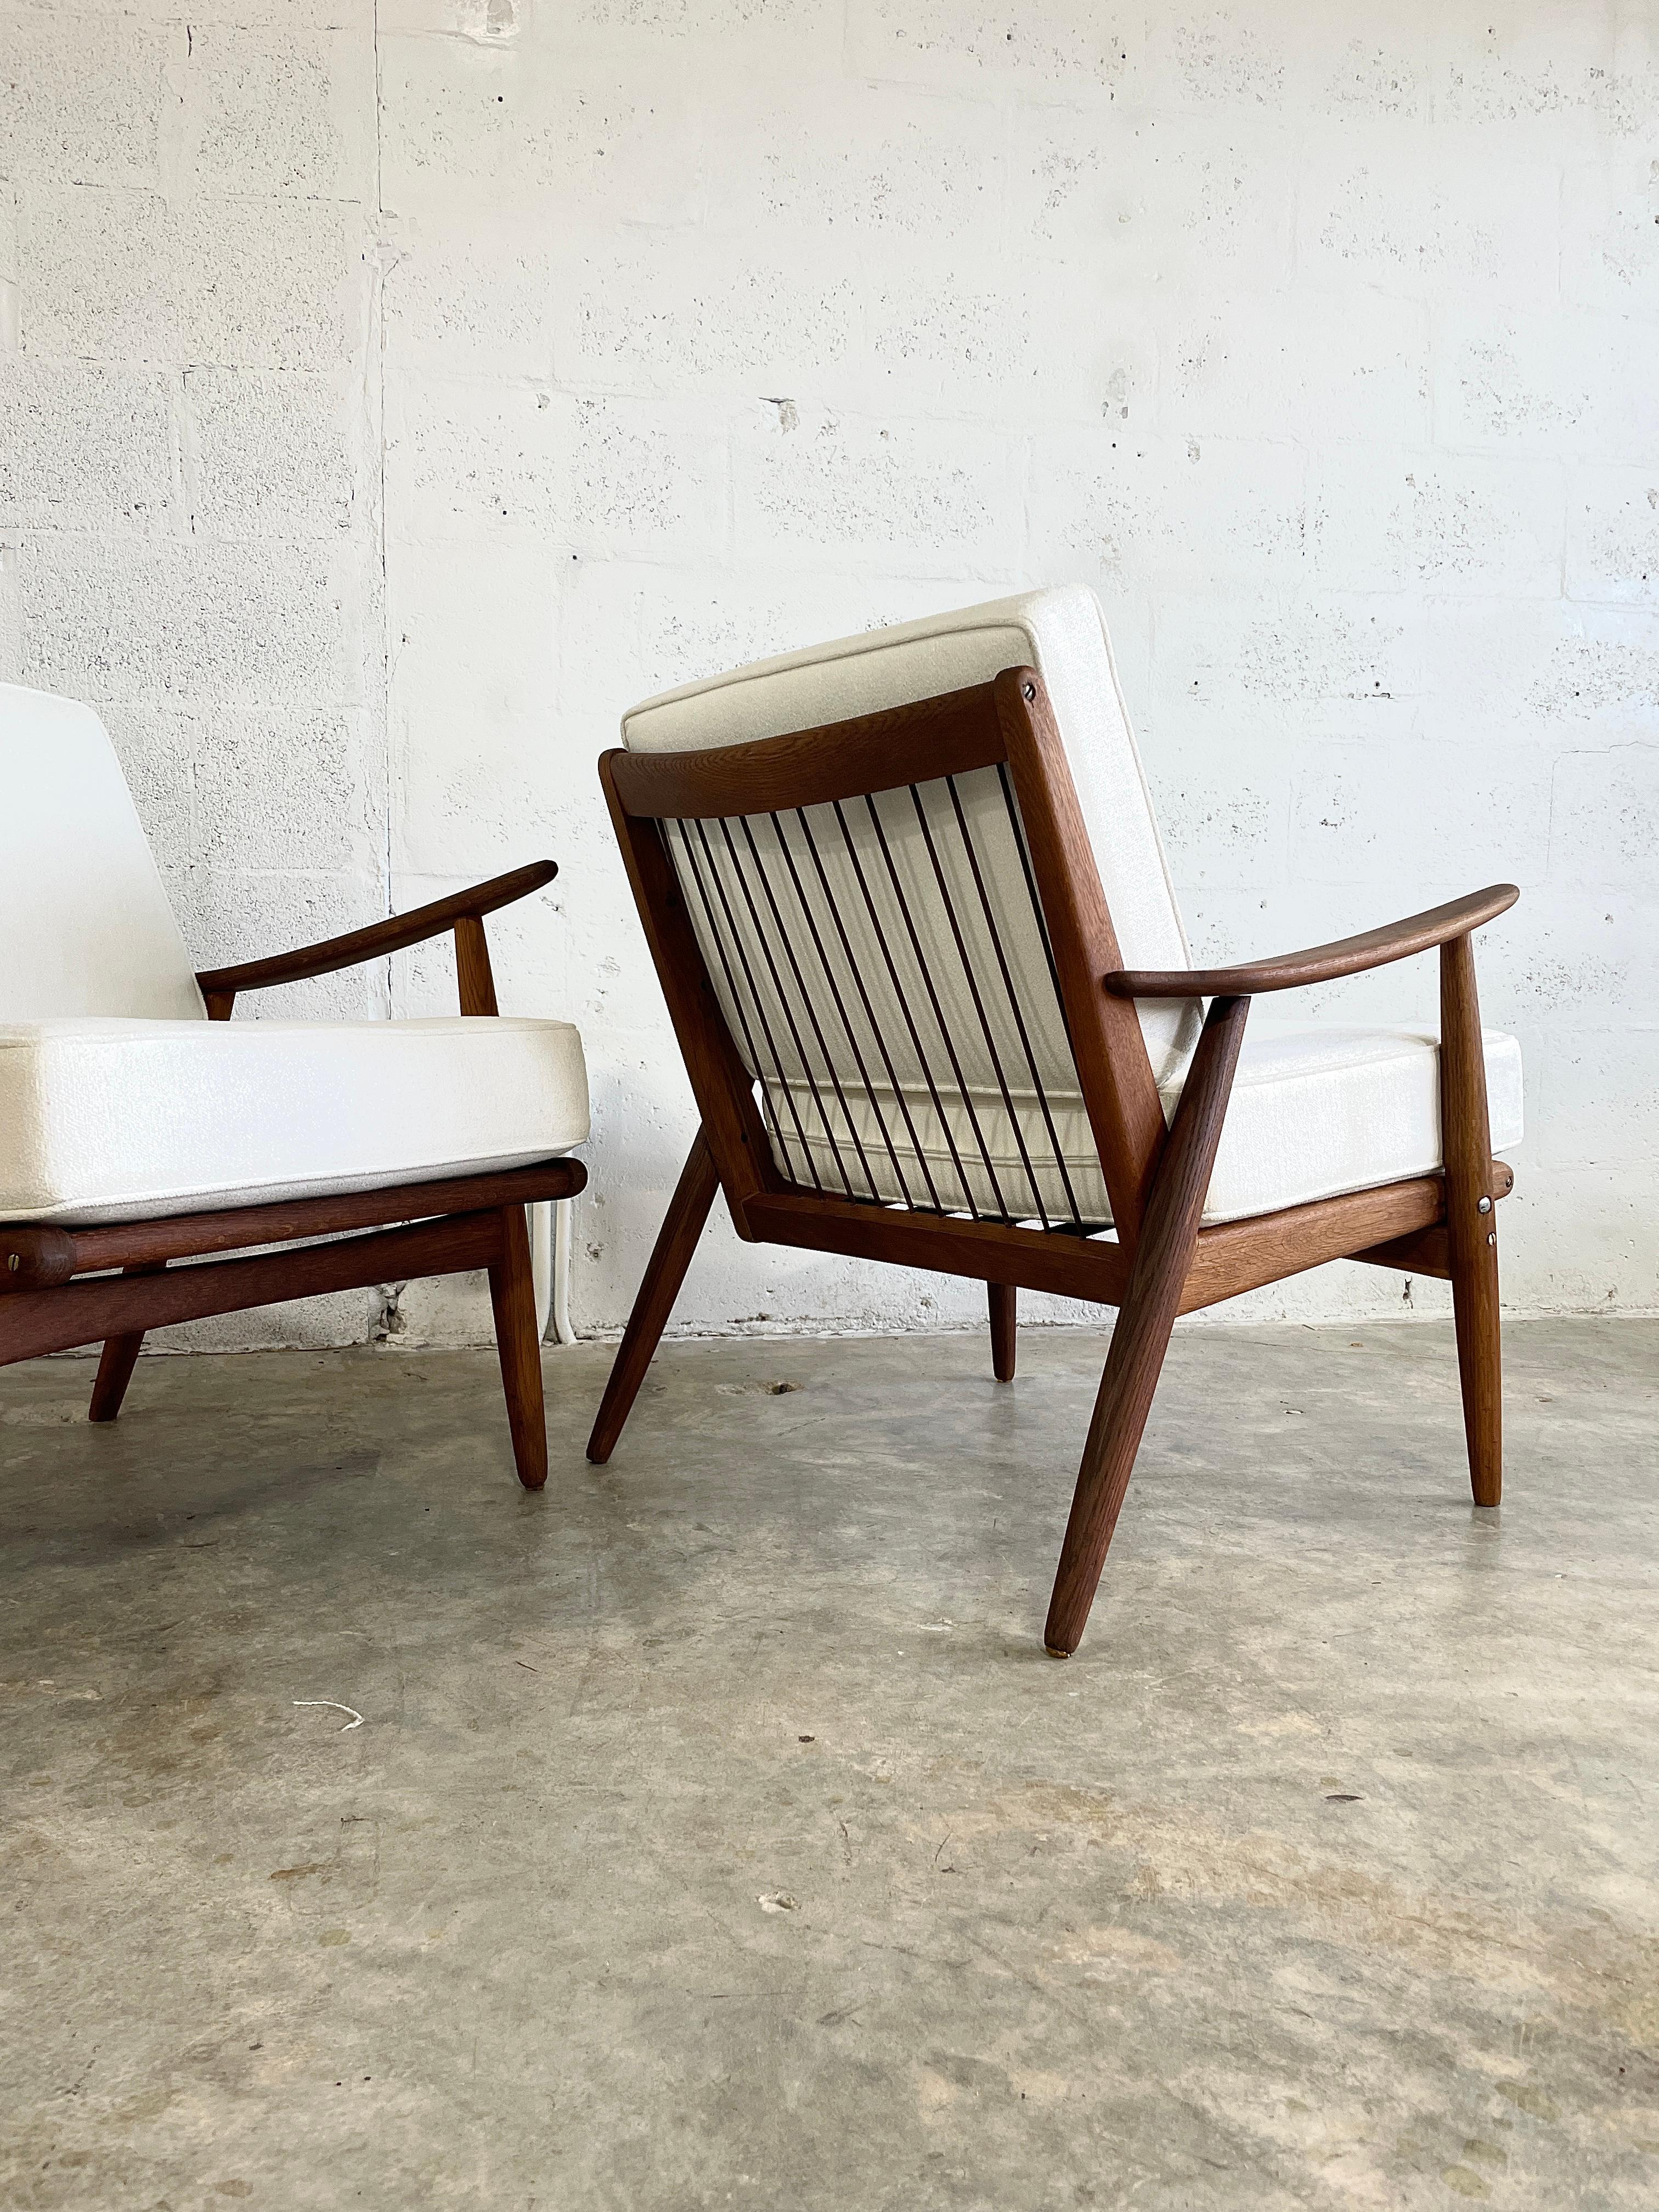 Pair Mid Century Danish Modern Chairs. New foam and upholstery.